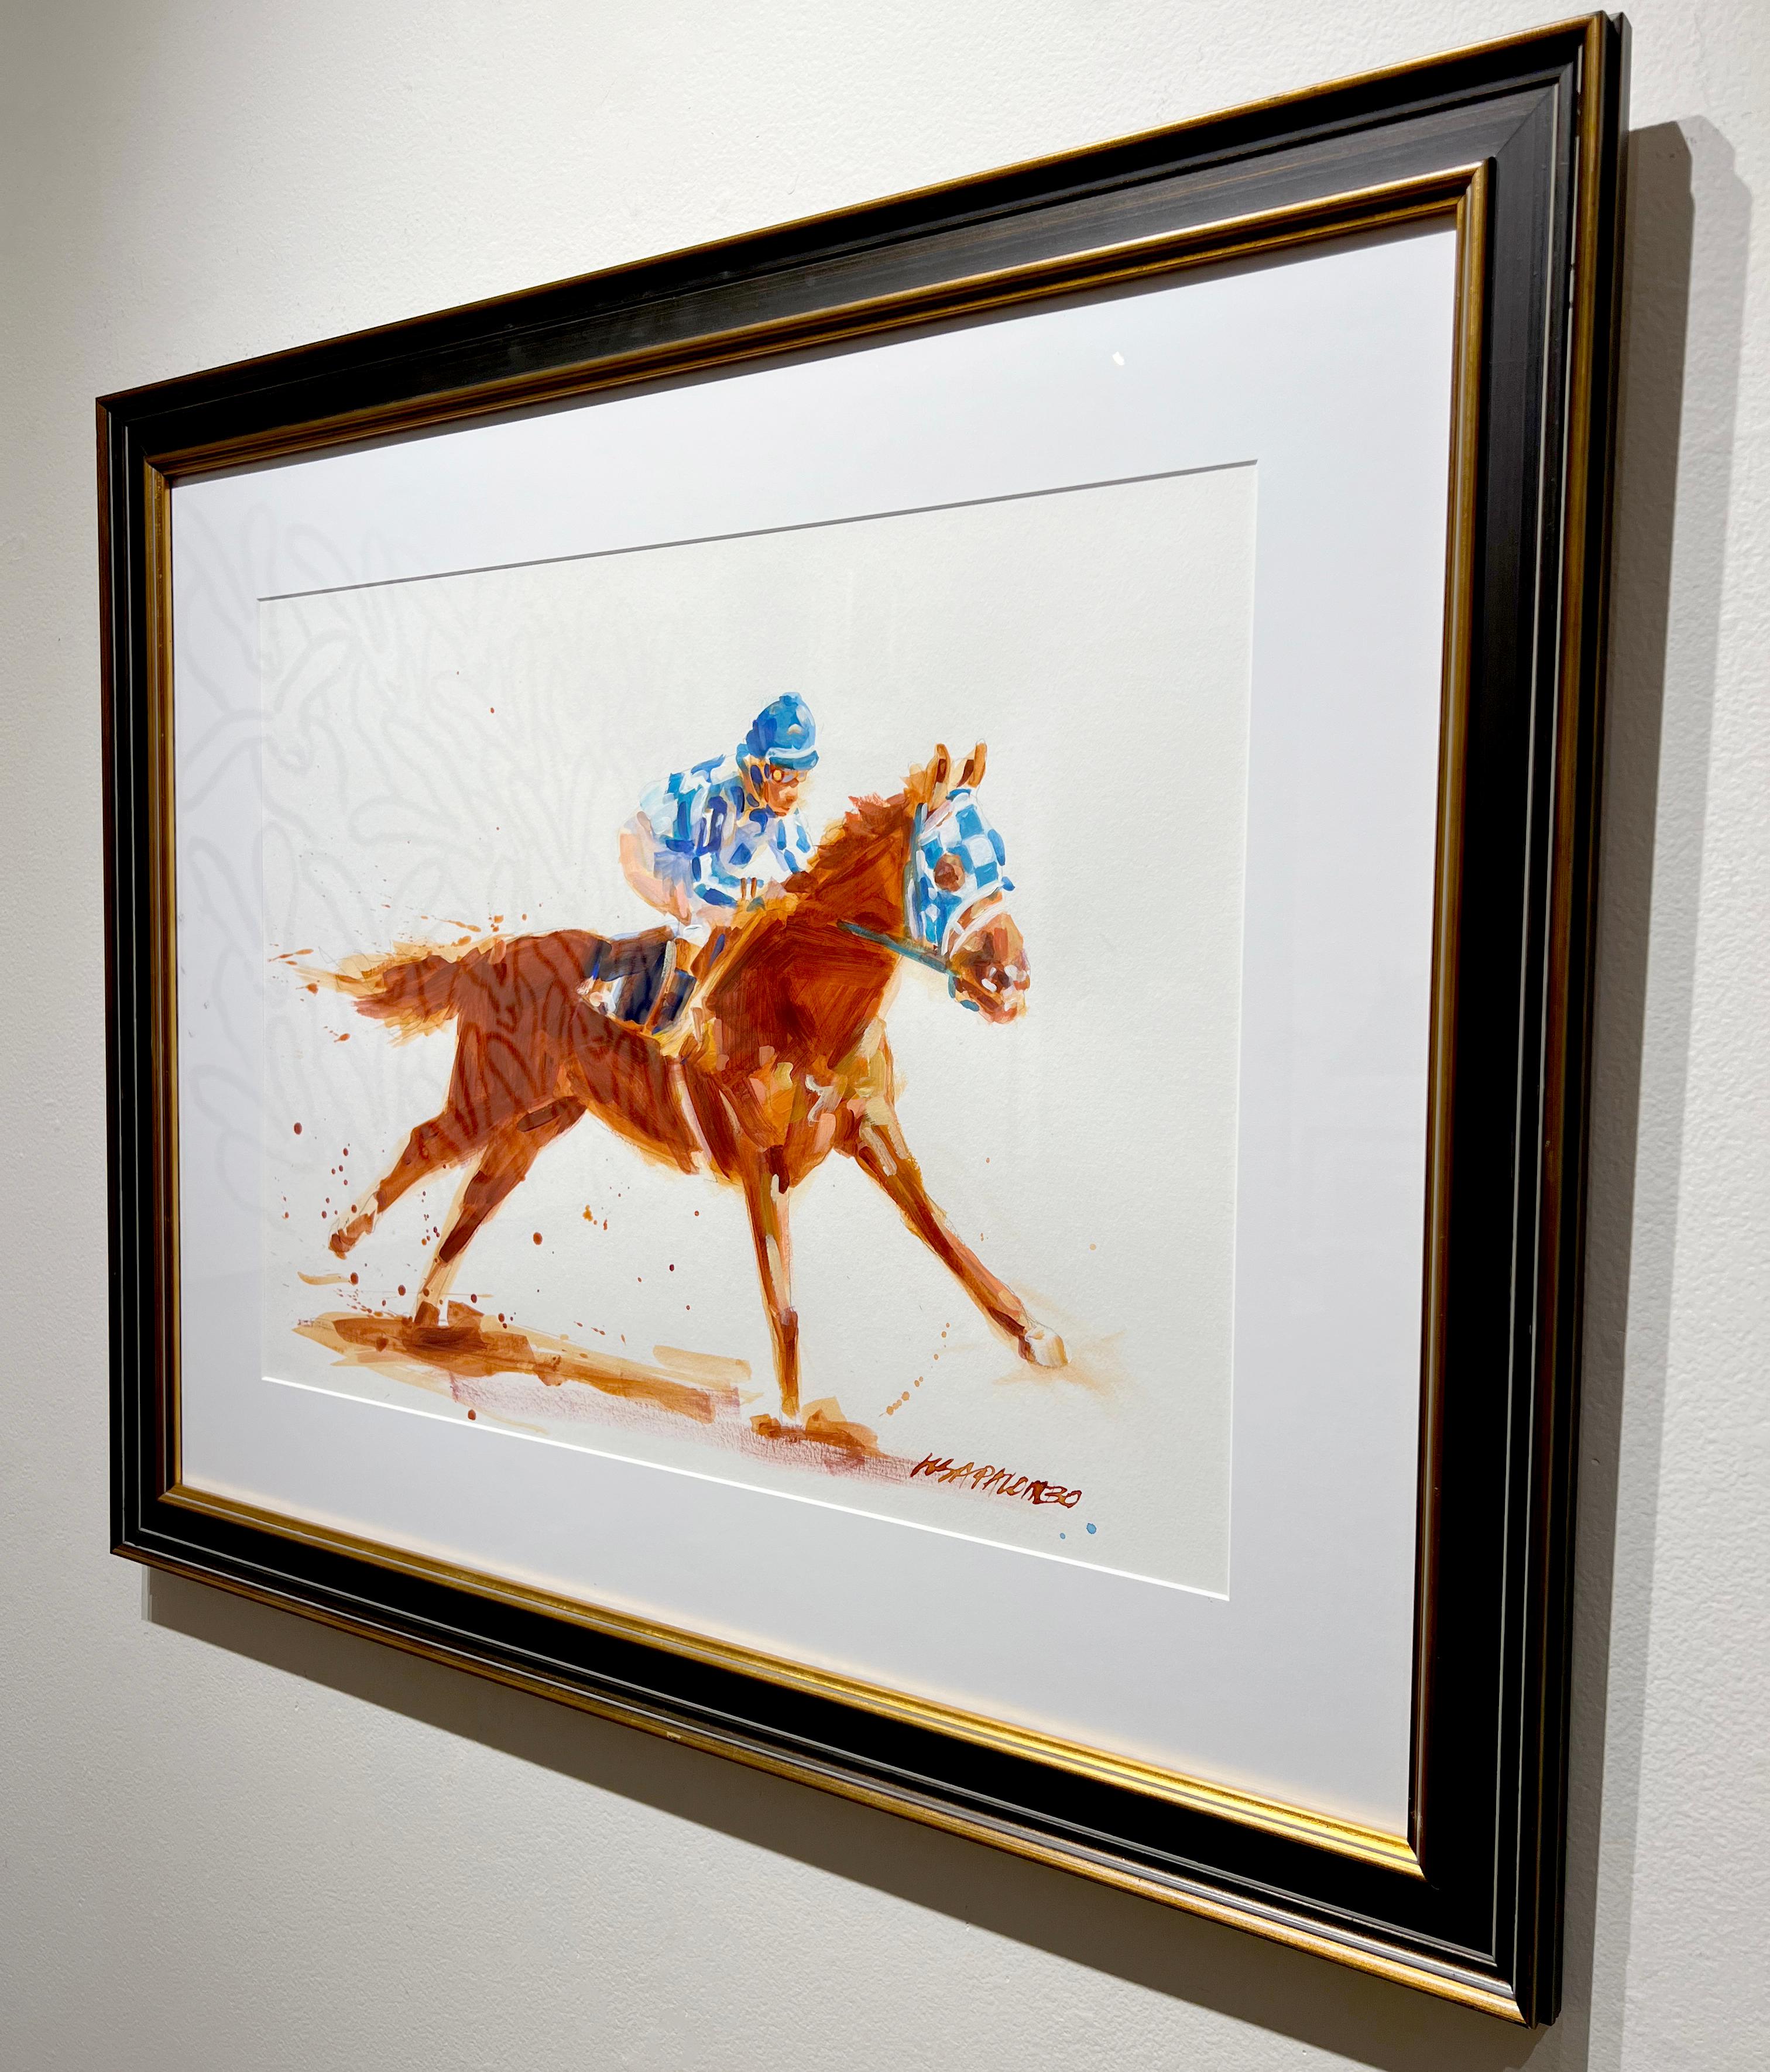 This equine impressionist painting, 